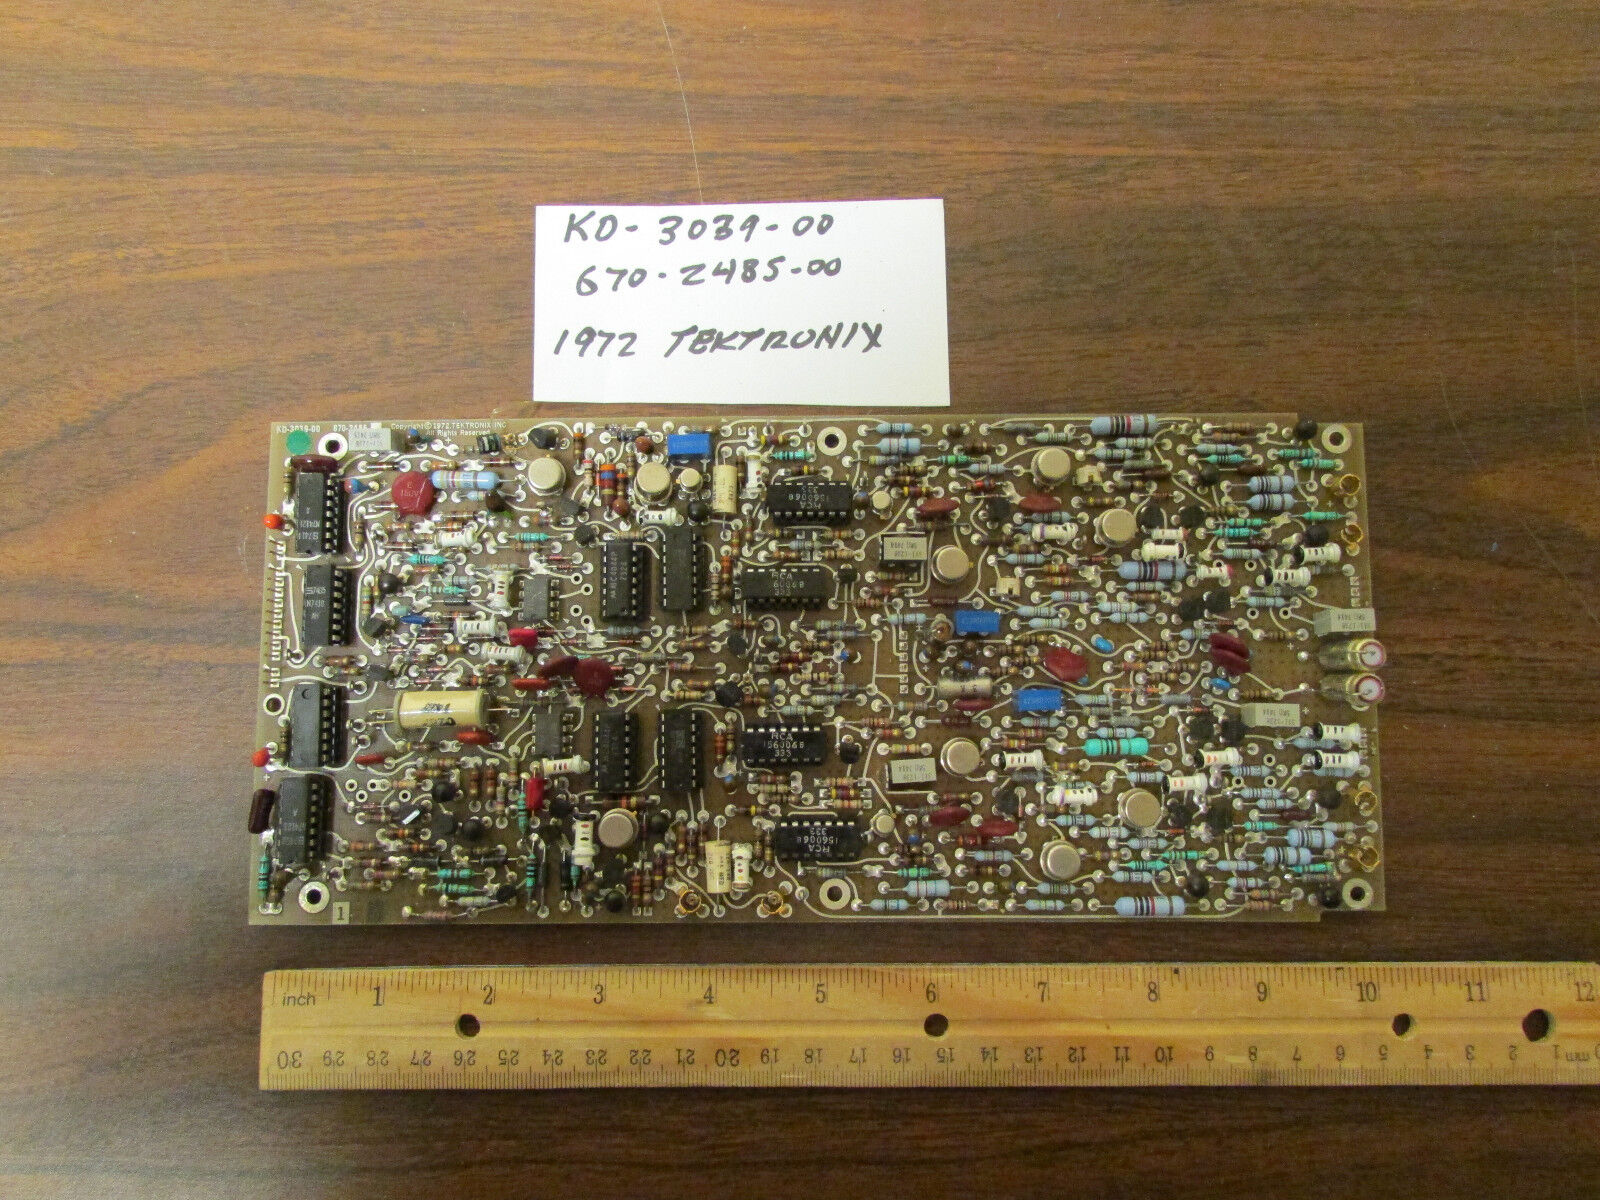 Tektronix 670-2485-00 Analog Circuit Board From 7912 Oscilloscope